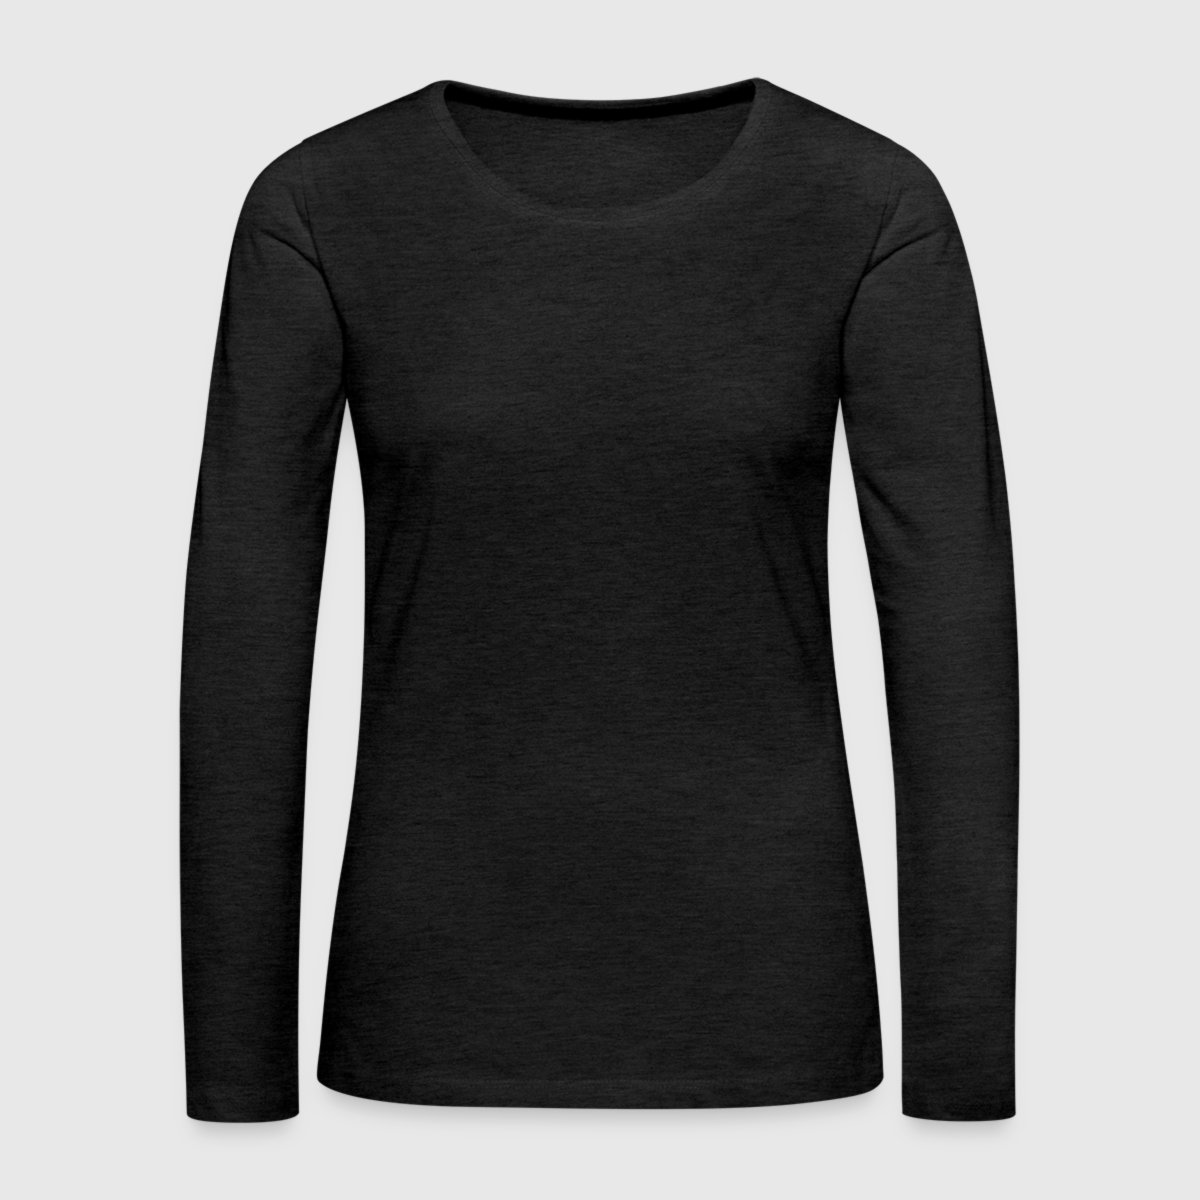 Women's Premium Slim Fit Long Sleeve T-Shirt - Front